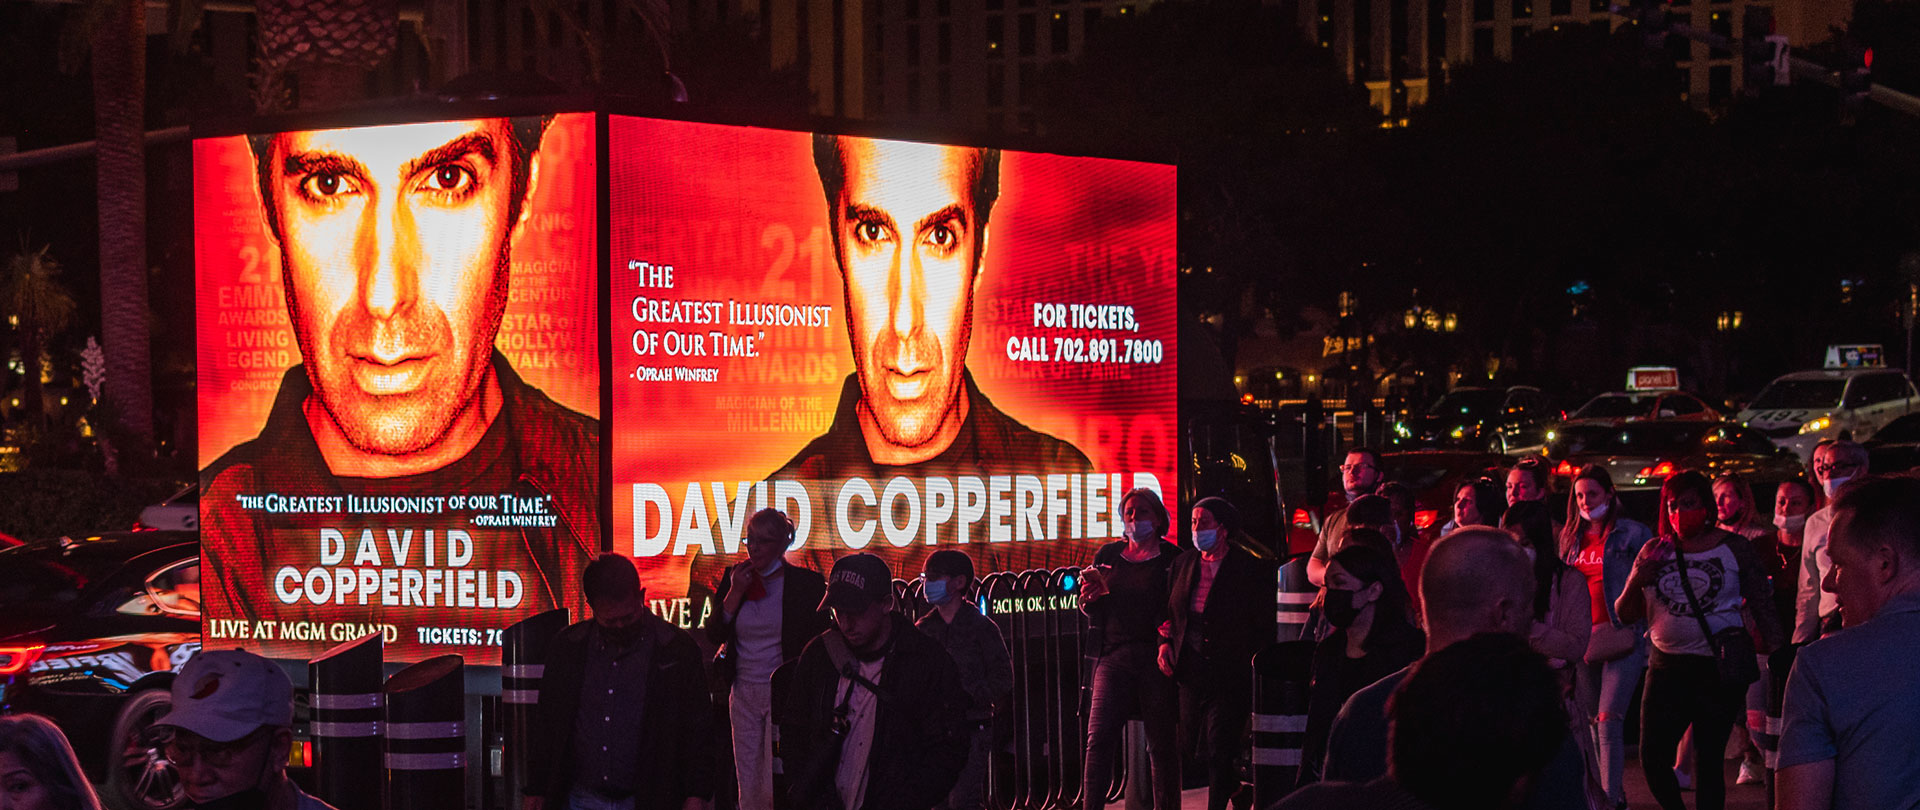 Digital Billboard Truck on The Strip advertising David Copperfeild